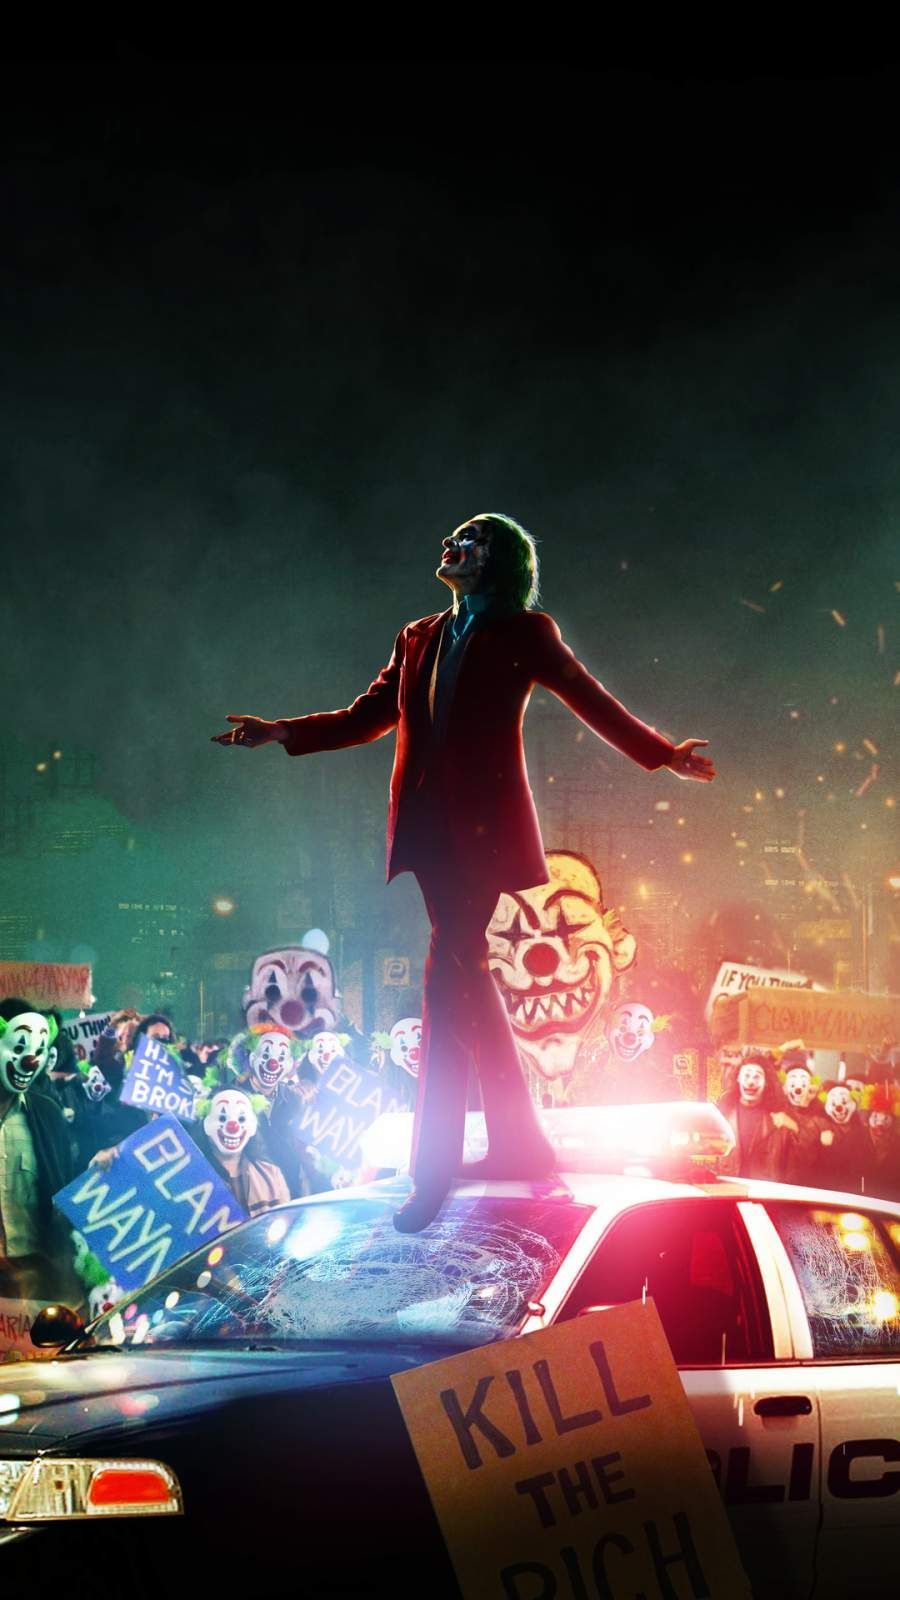 Joker with Clowns iPhone Wallpaper #Movie fondos Joker with Clowns iPhone Wallpaper